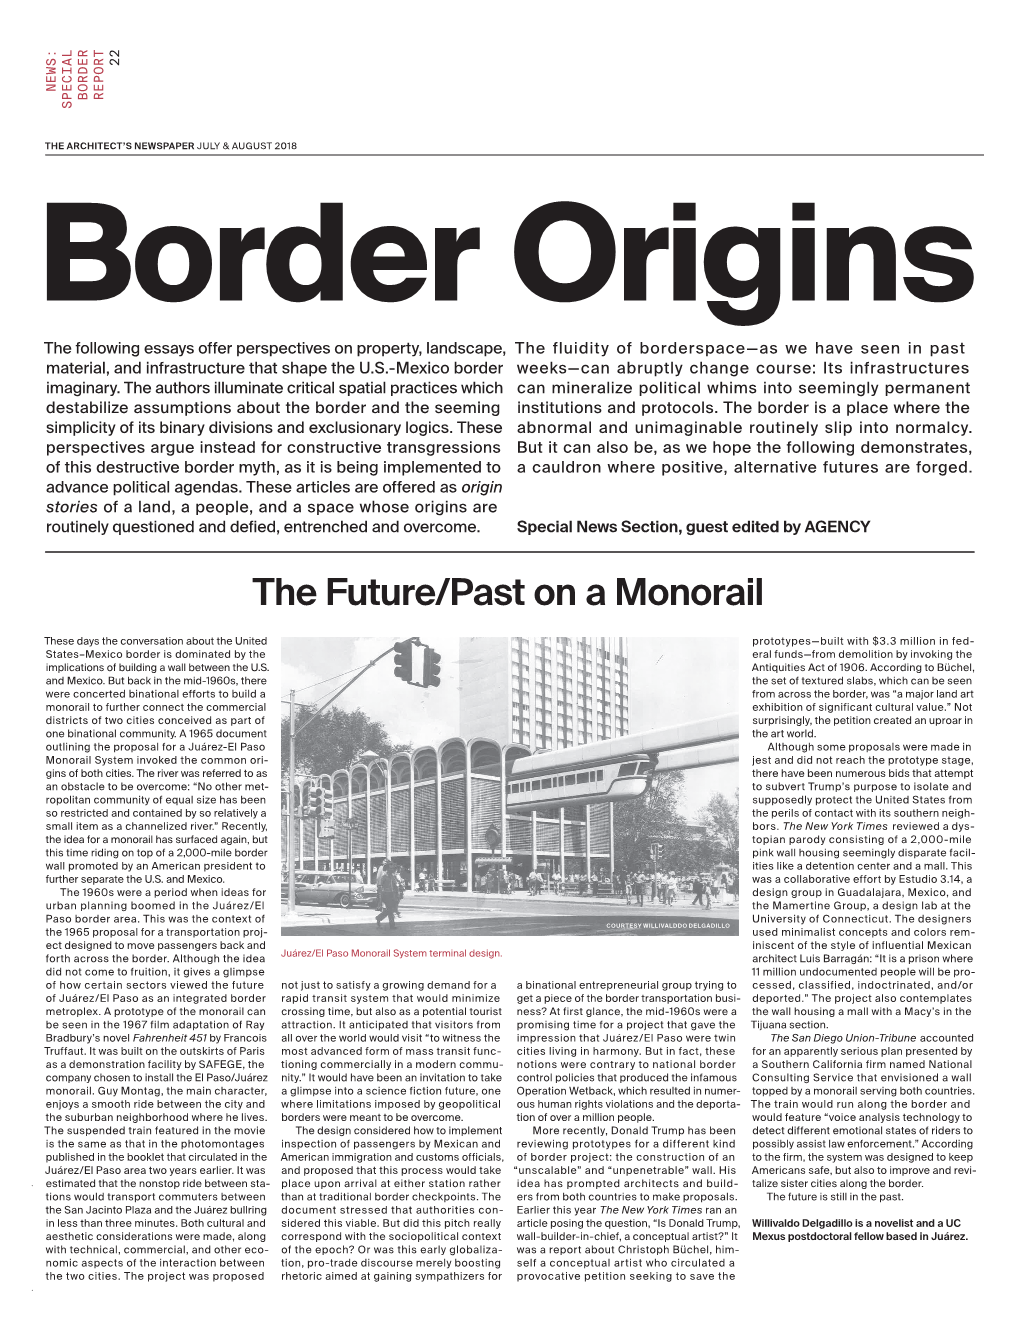 Prada Marfa: Immigrant Architecture?